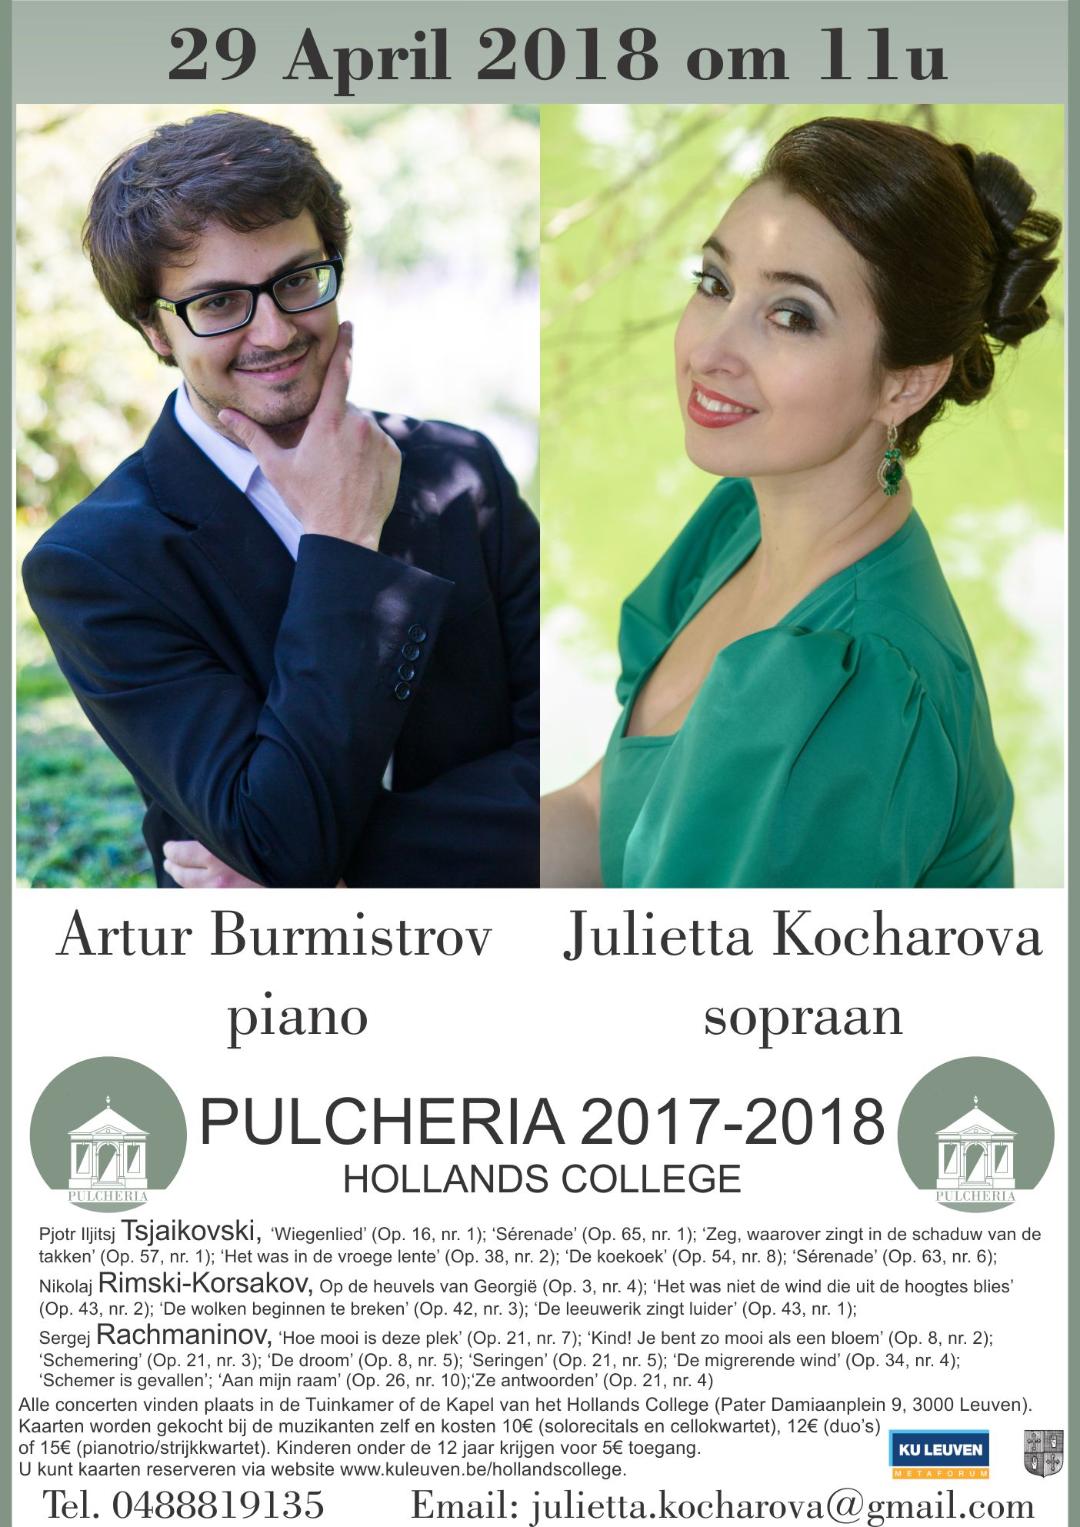 Affiche. Leuven. Romance is the soul of a Russian person. Artur Burmistrov (piano) and Julietta Kocharova (sopraan). 2018-04-29